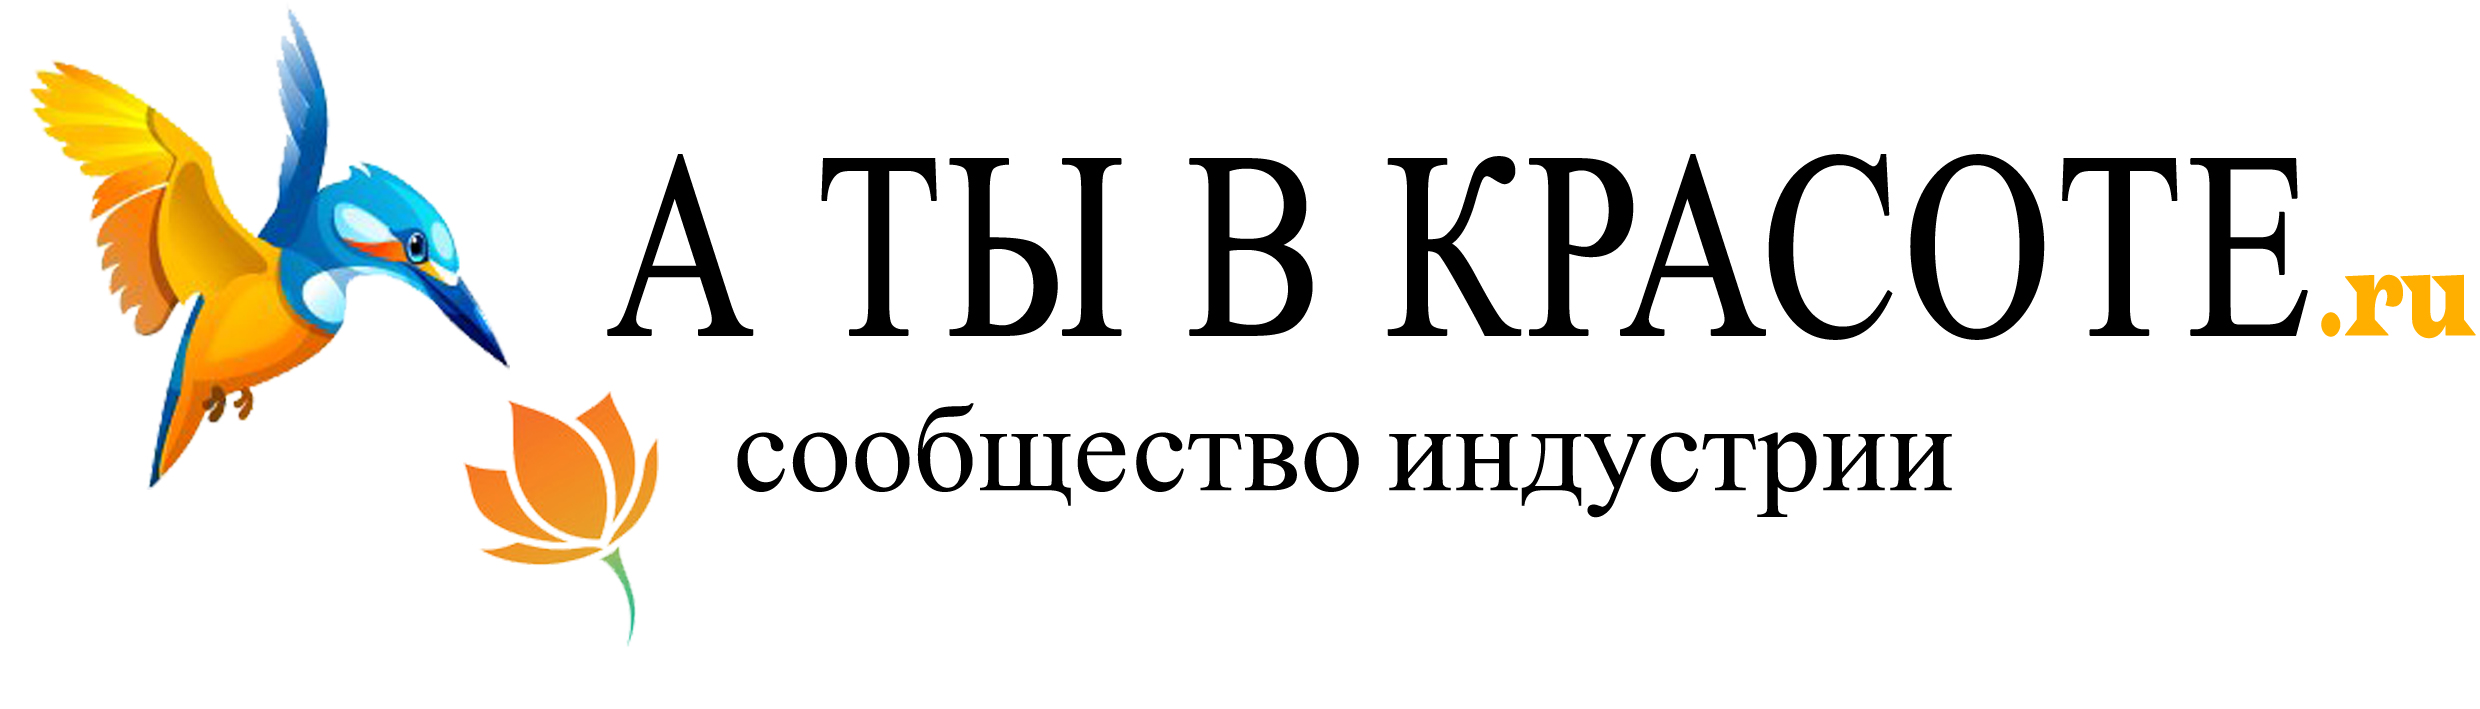 logo-02.jpg